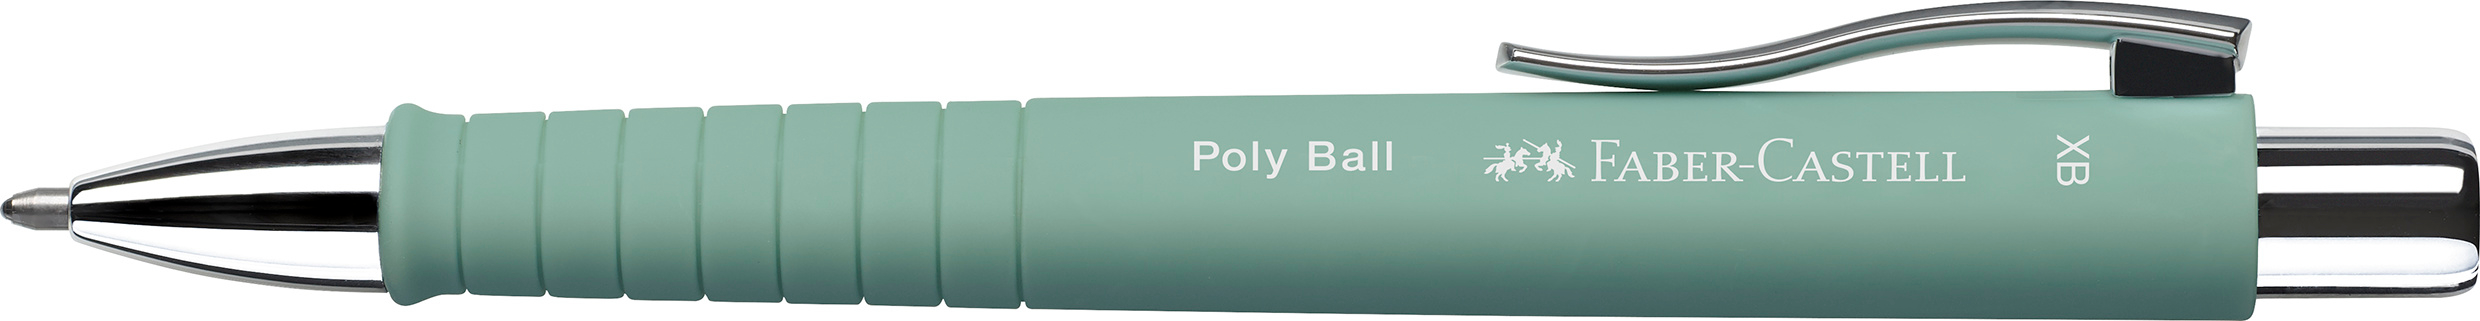 FABER-CASTELL Stylo à bille Poly Ball XB 241165 mint mint